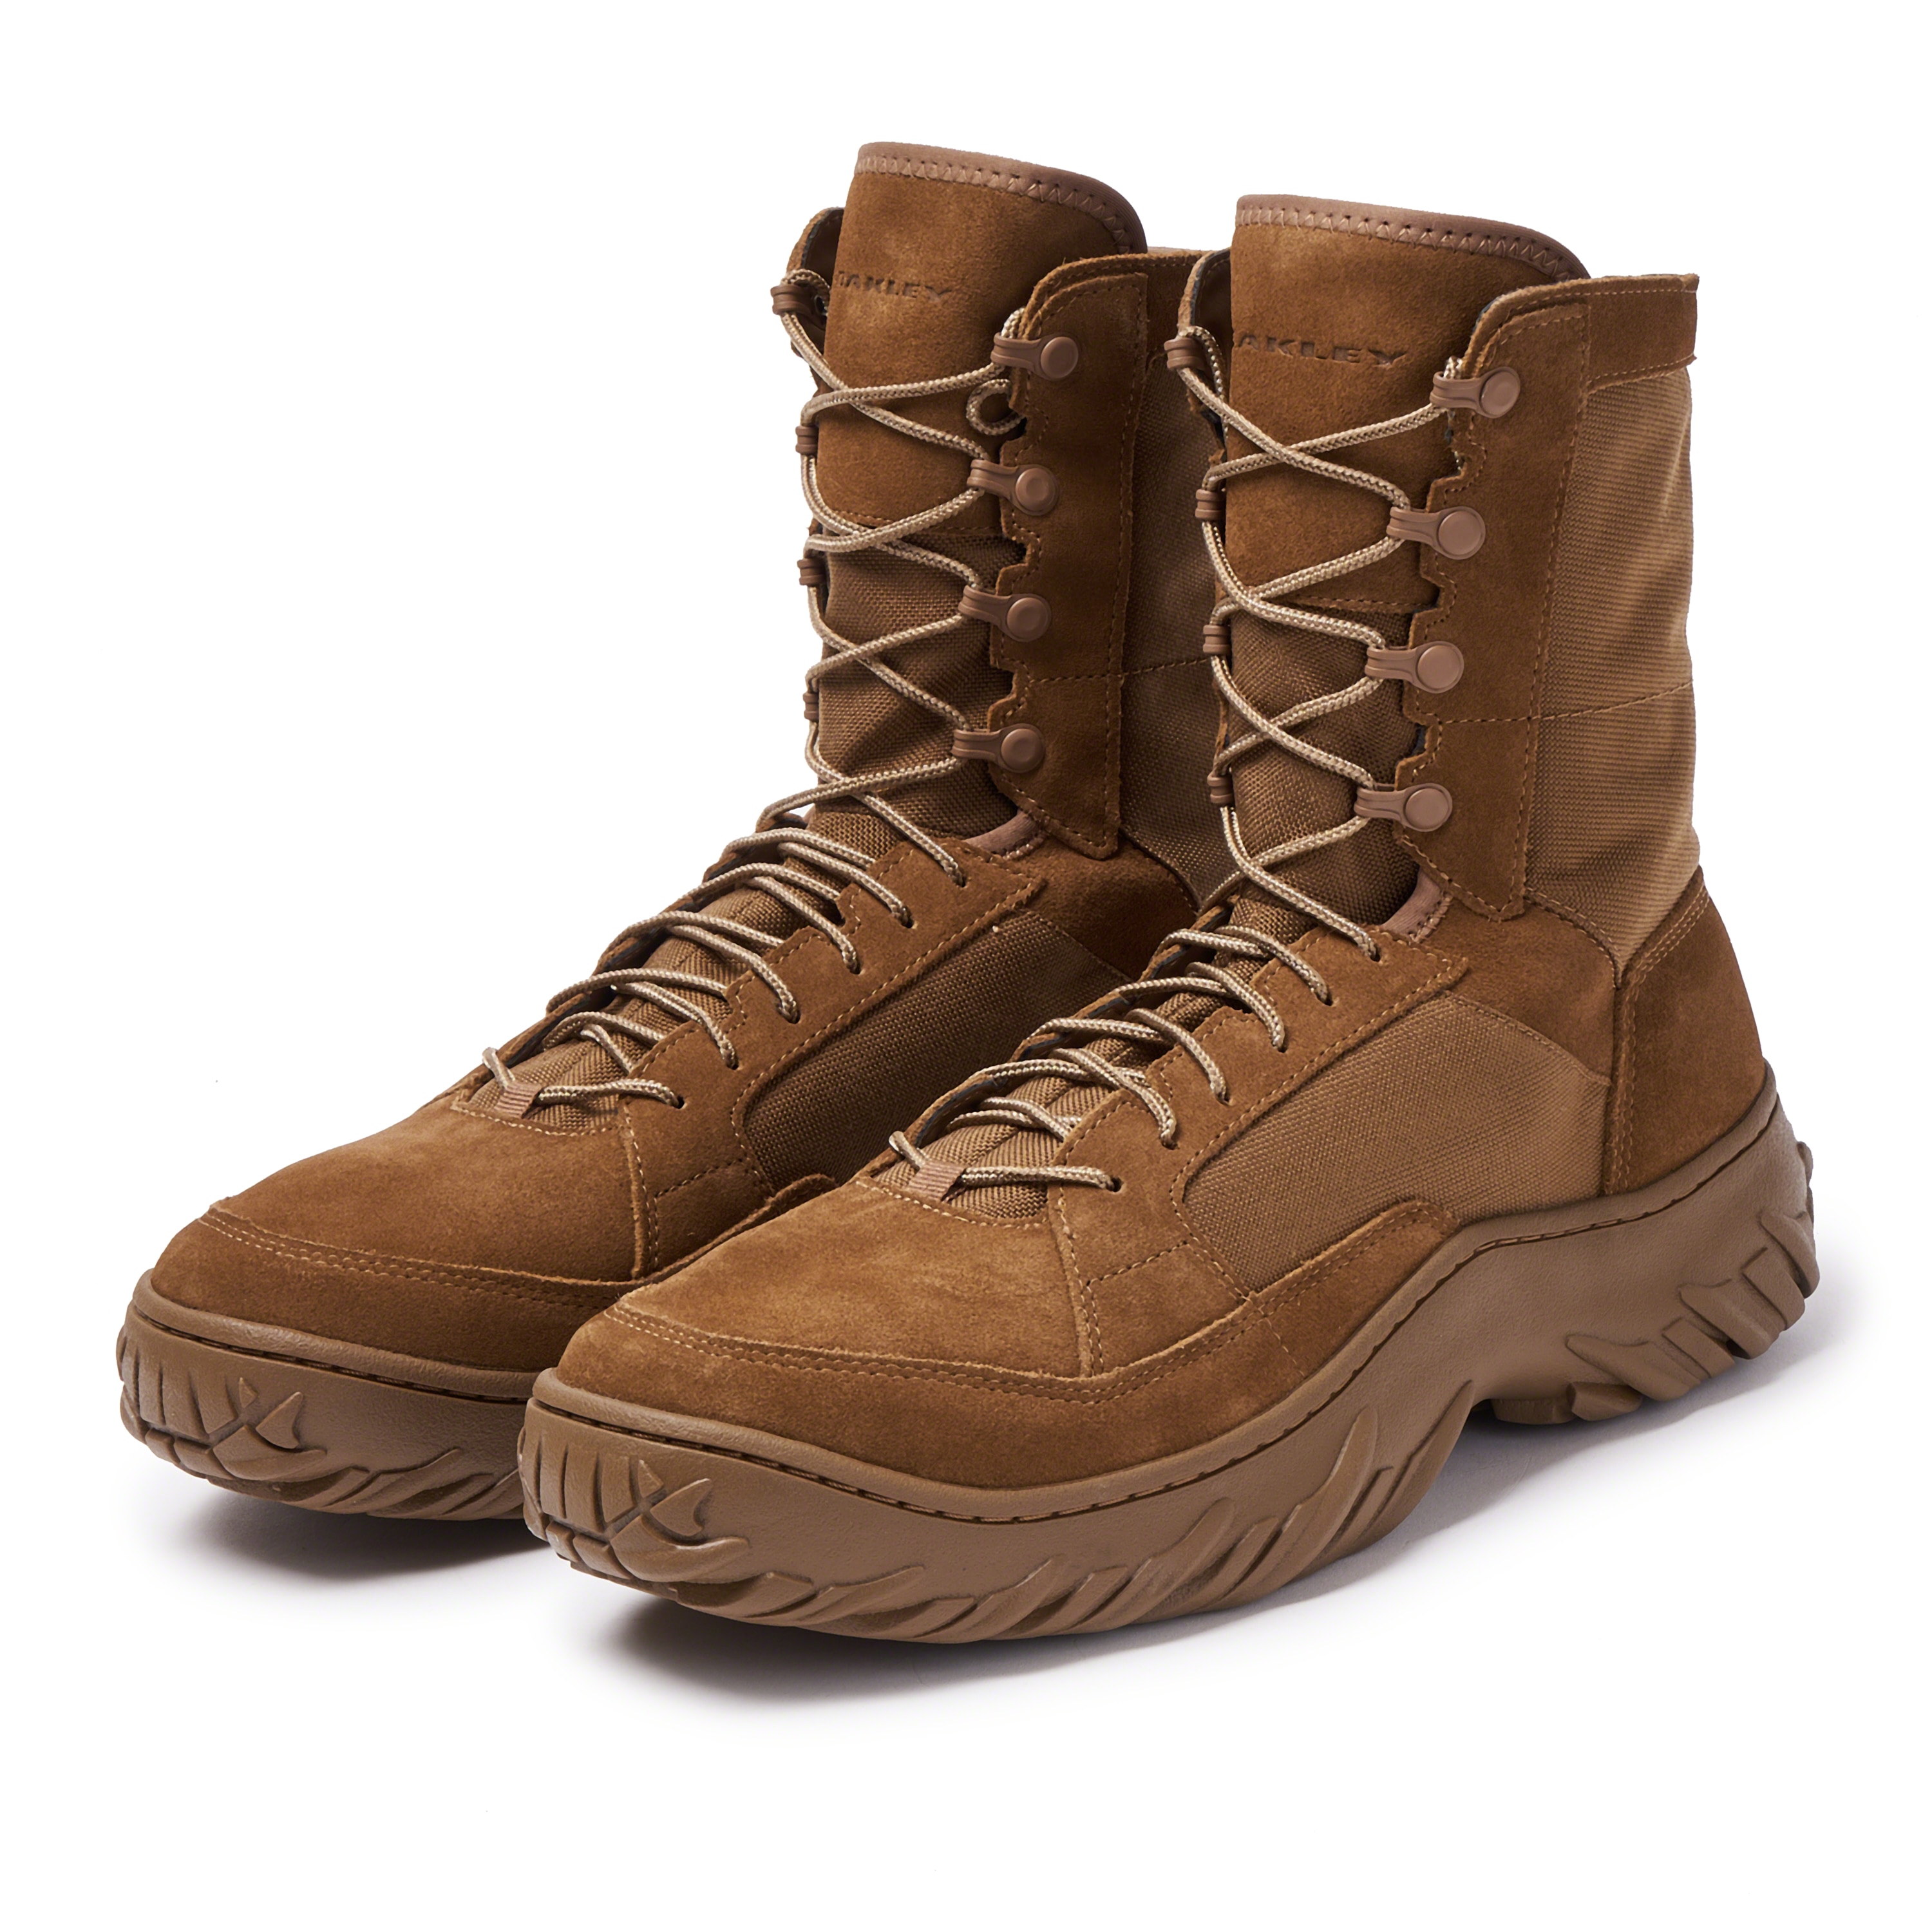 oakley boots canada